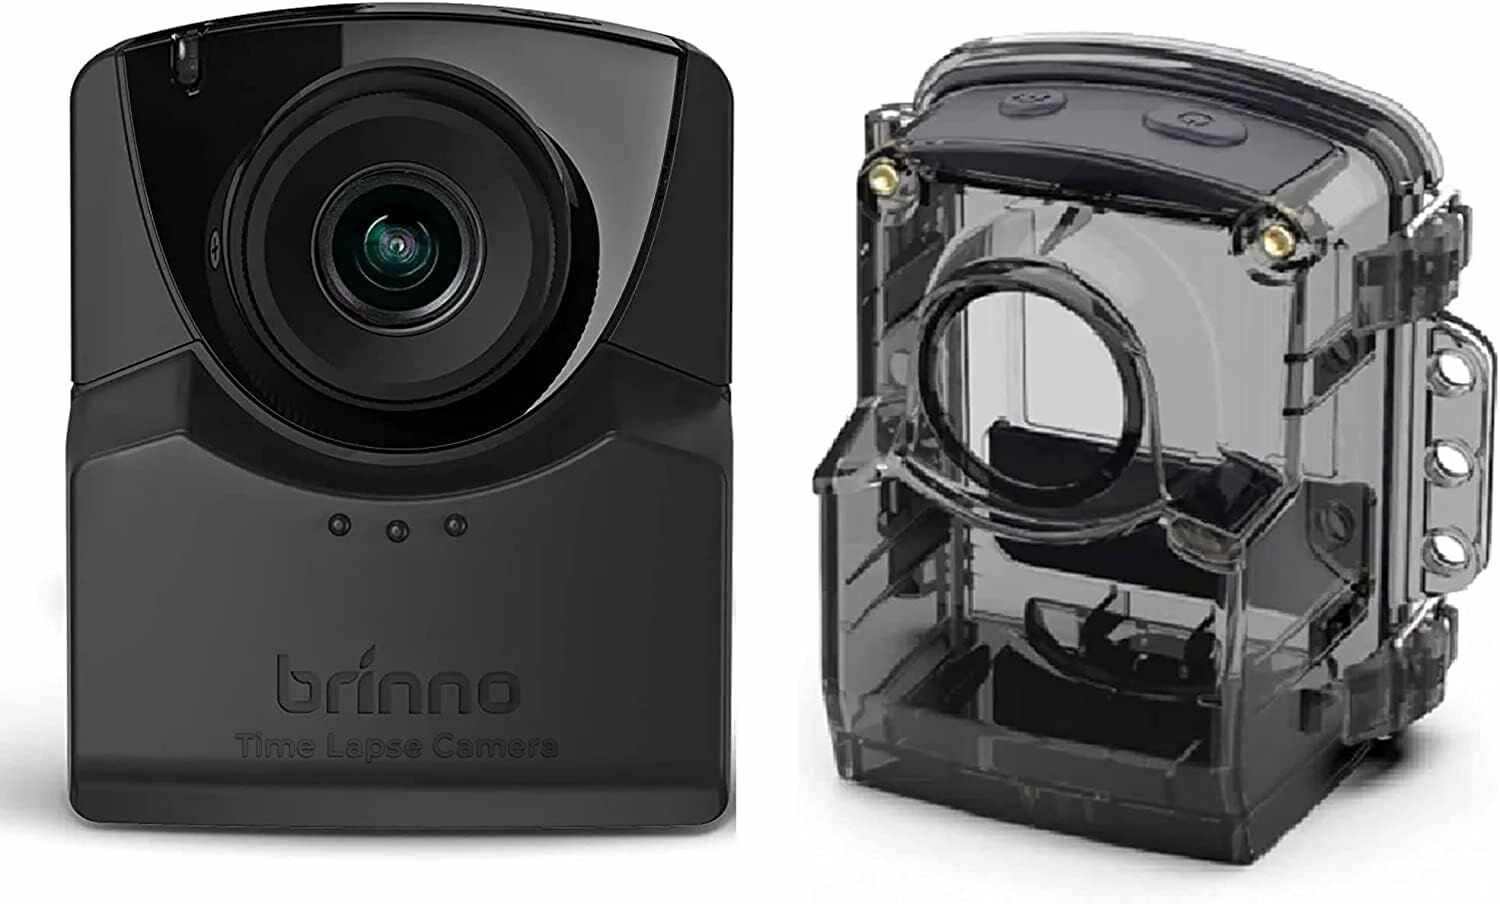 Brinno Empower TLC2020 Hızlandırılmış Kamera ve ATH1000 Kılıfı